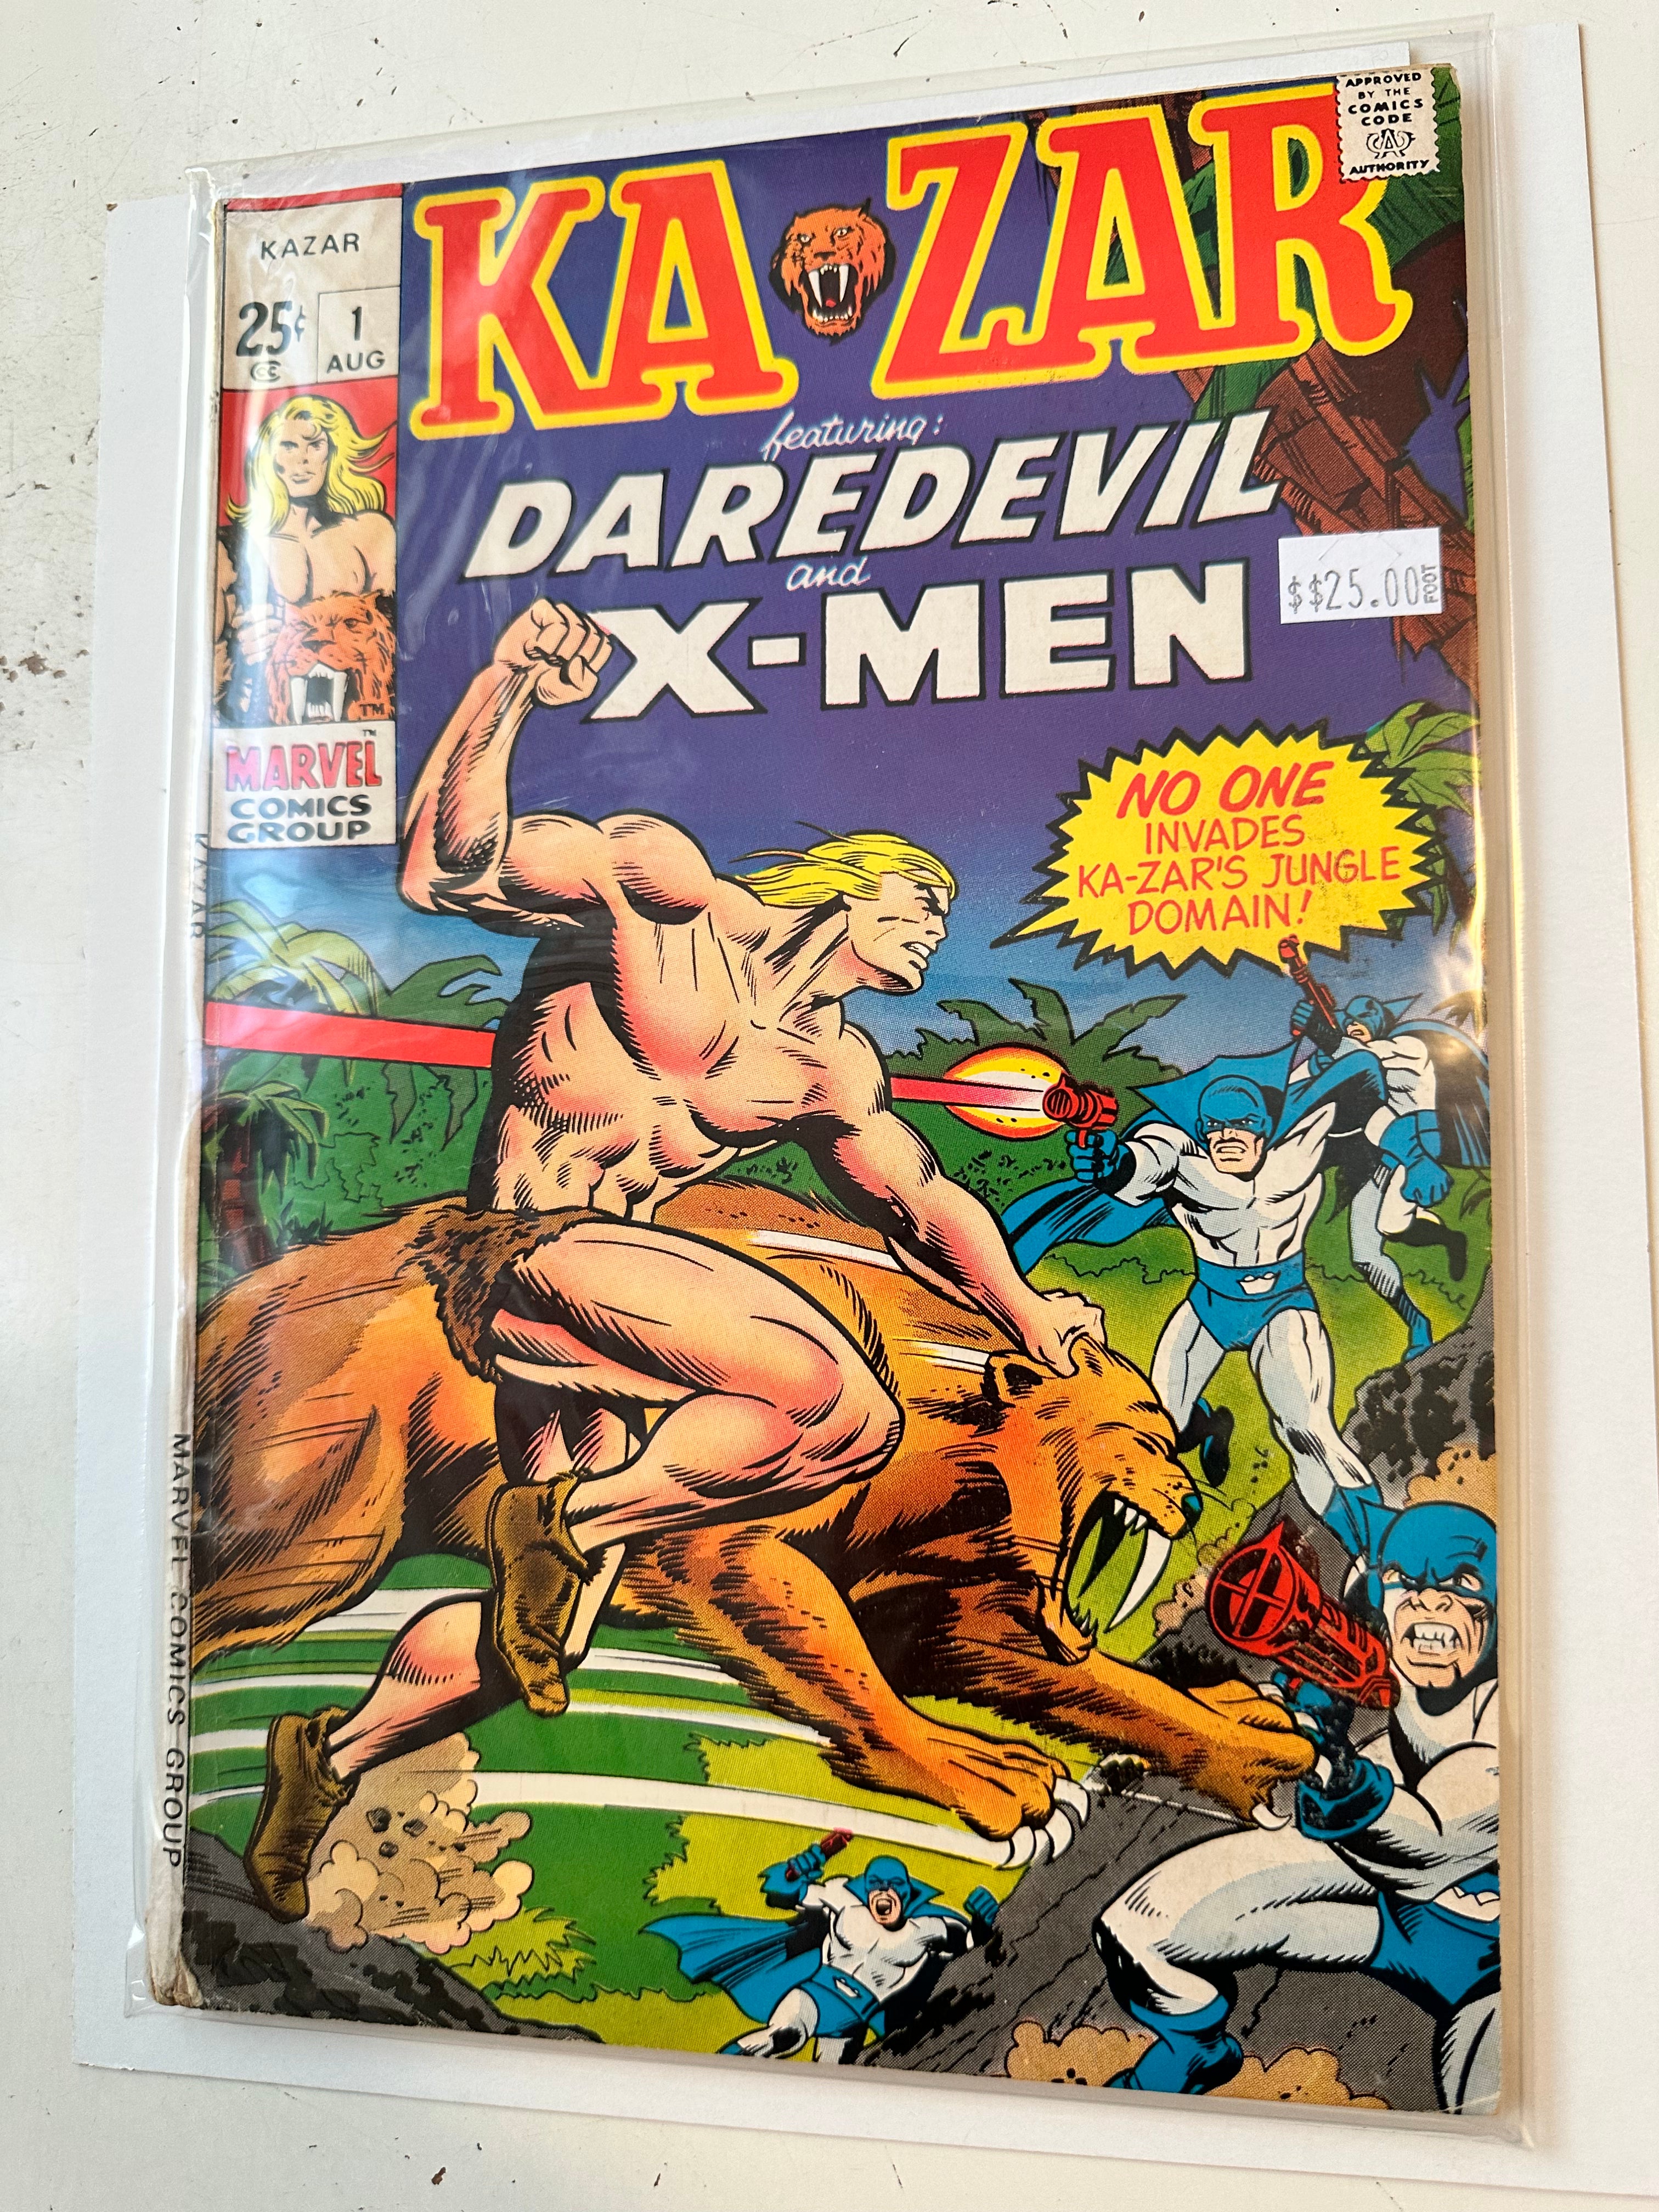 Ka-zar #1 features X-men and daredevil comic 1970